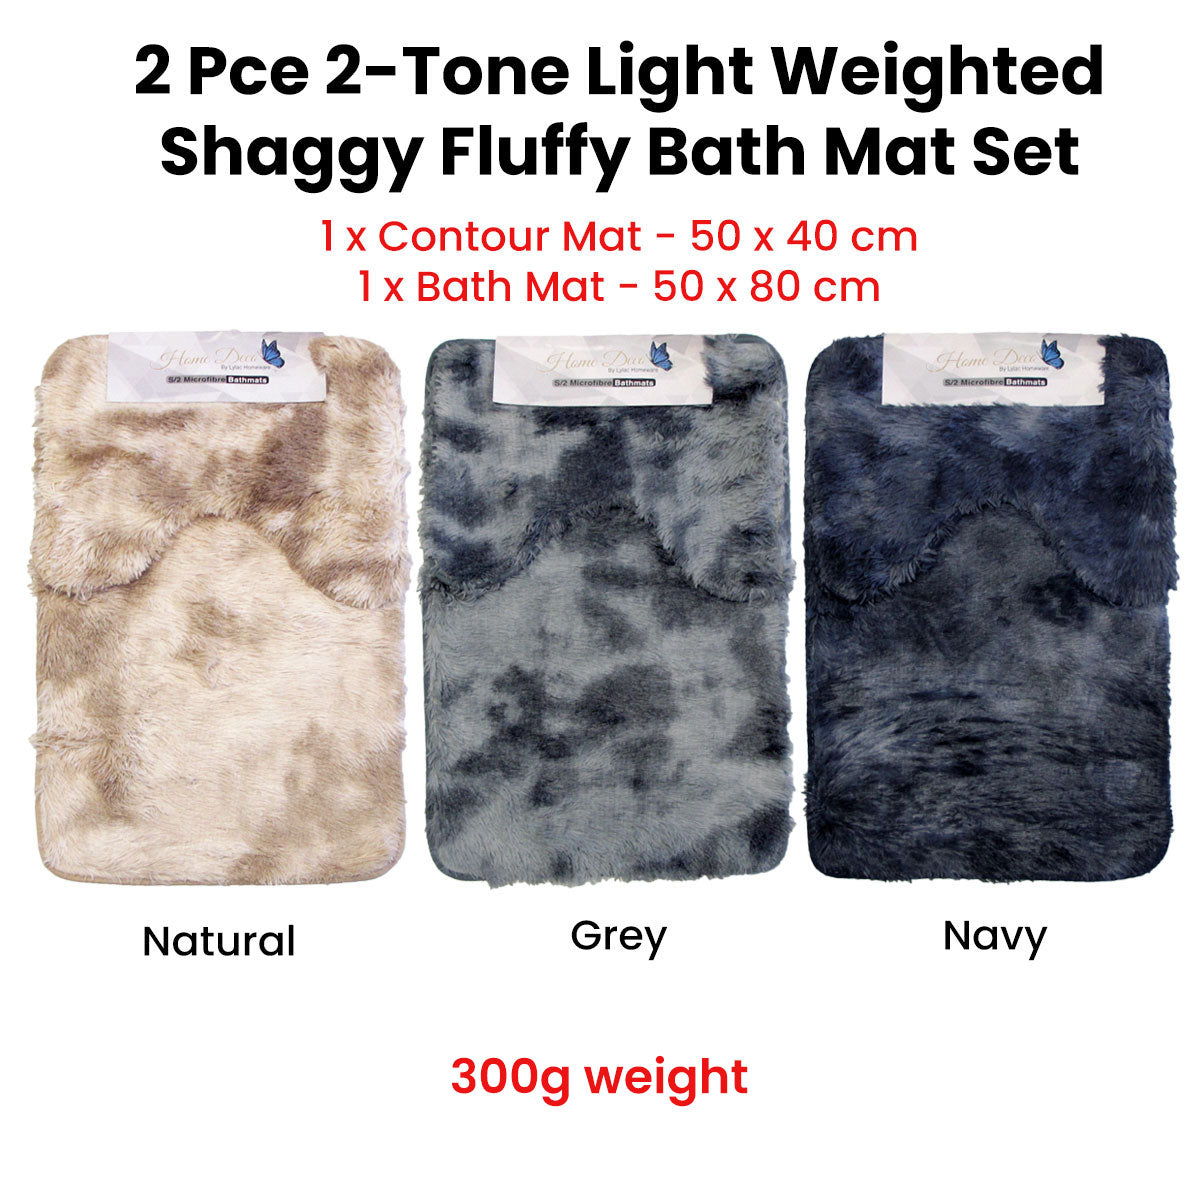 2 Pce 2-Toned Extra Light Weighted Shaggy Fluffy Bath Mat Set Natural